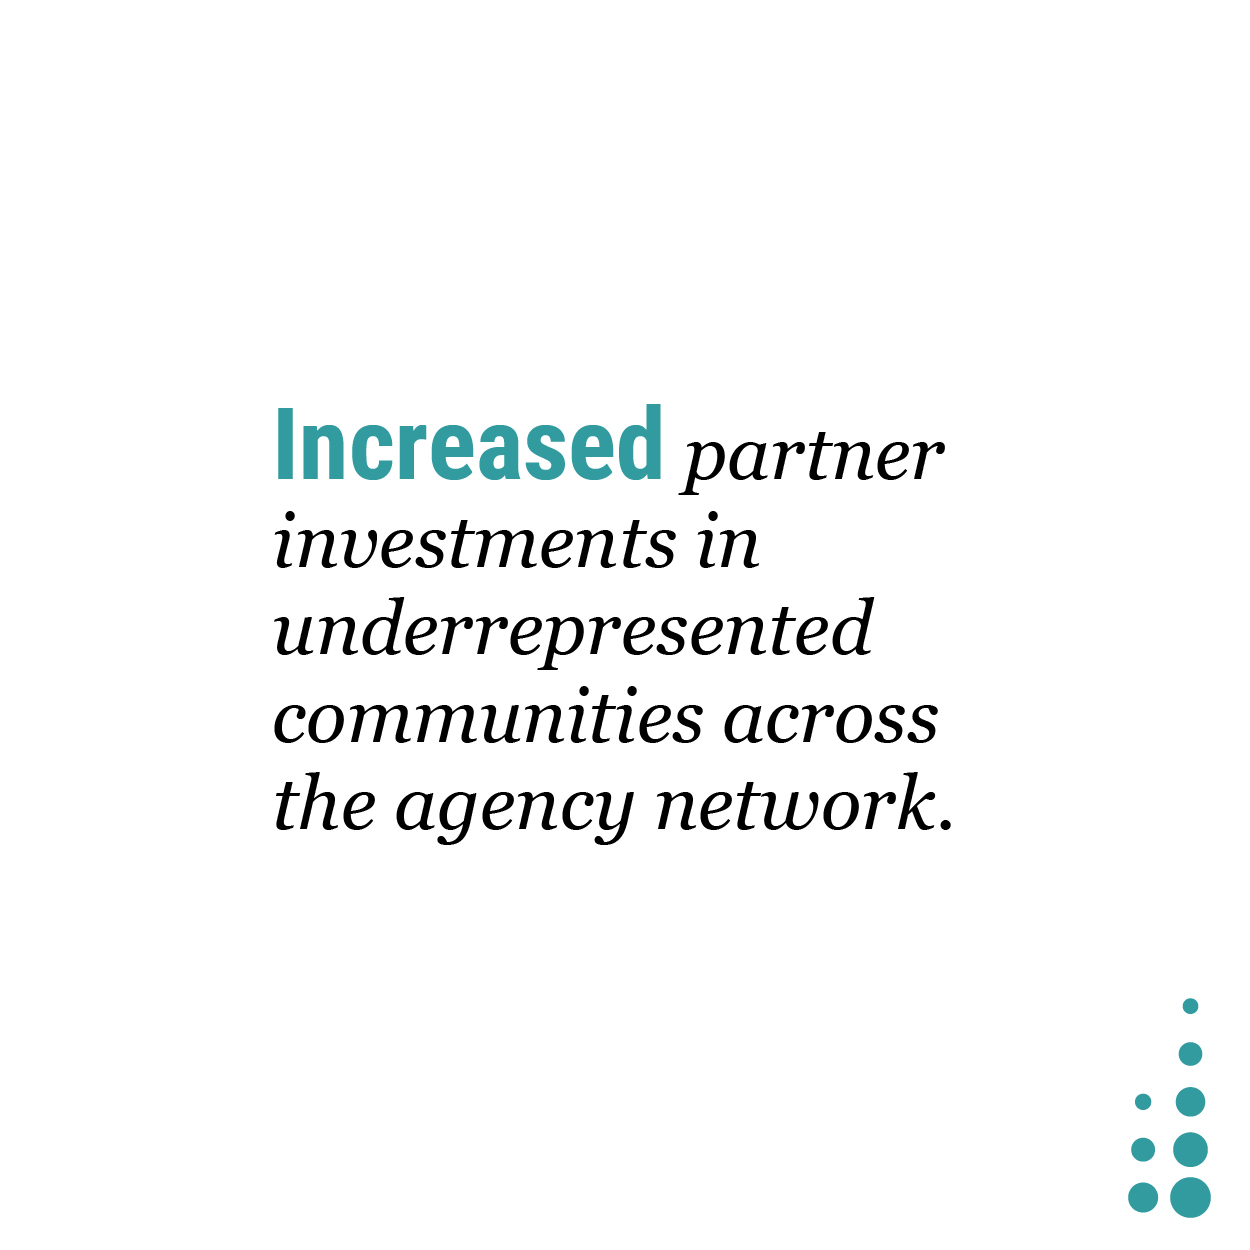 Increased partner investments in underrepresented communities across the agency network.